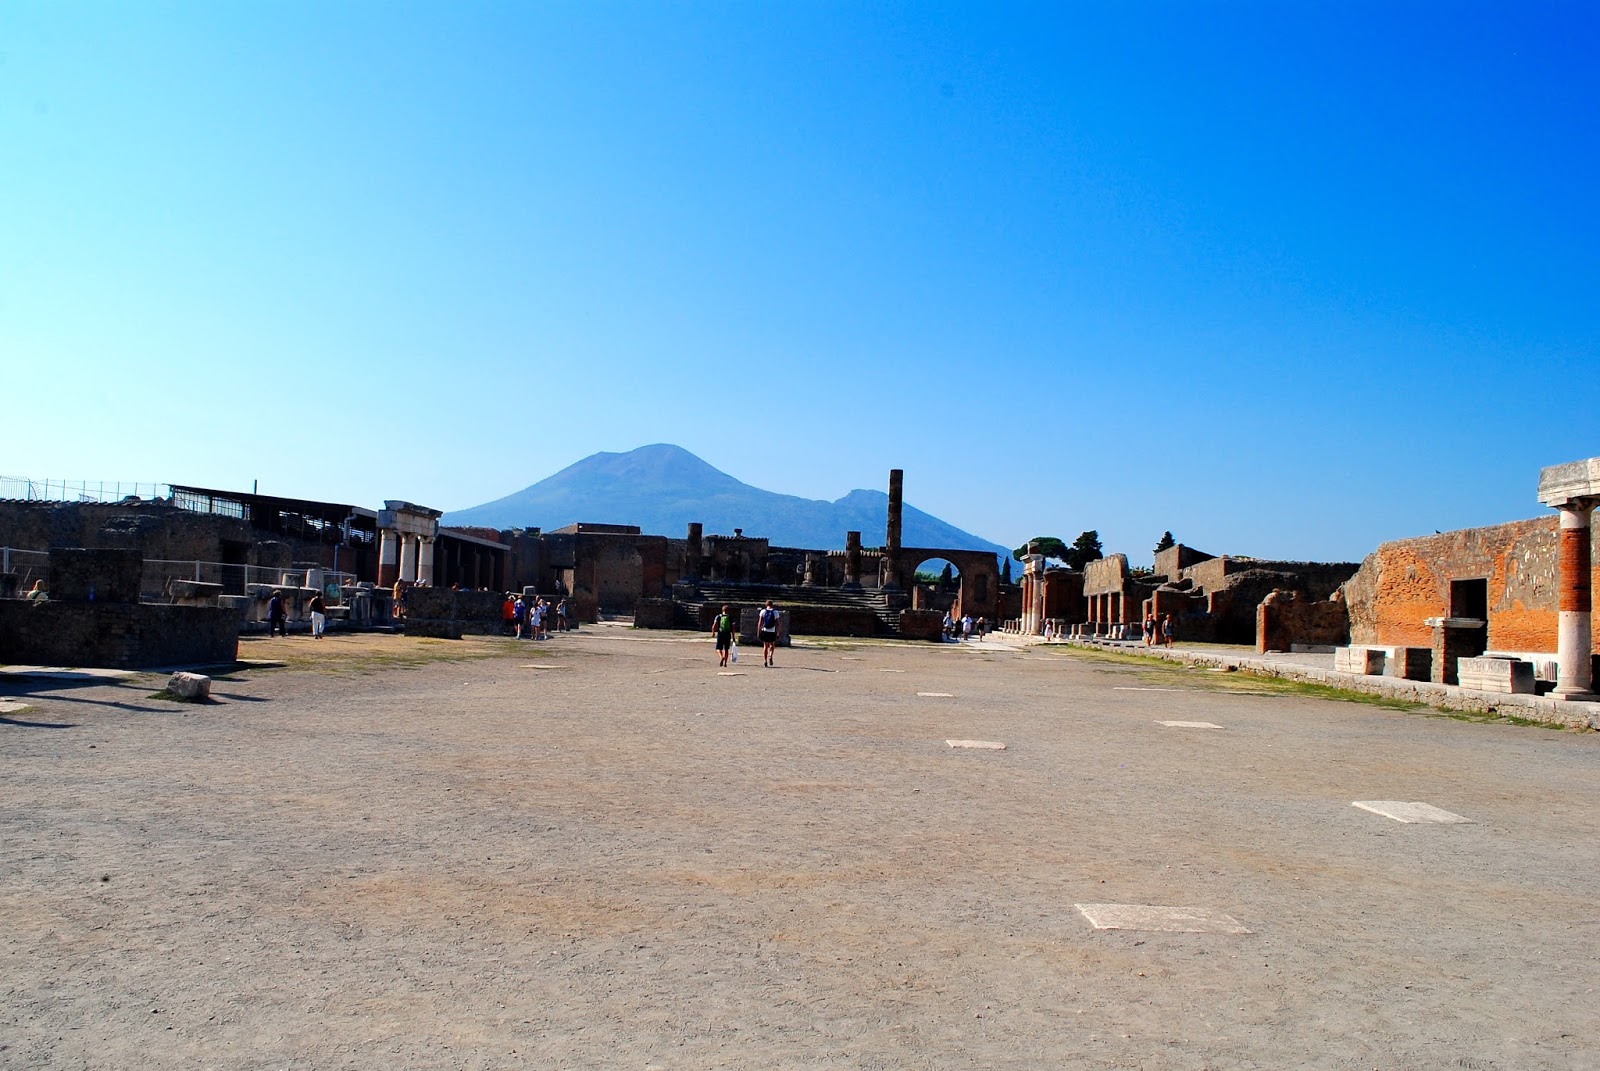 View of Mt Vesuvius from the Forum in Pompeii Italy